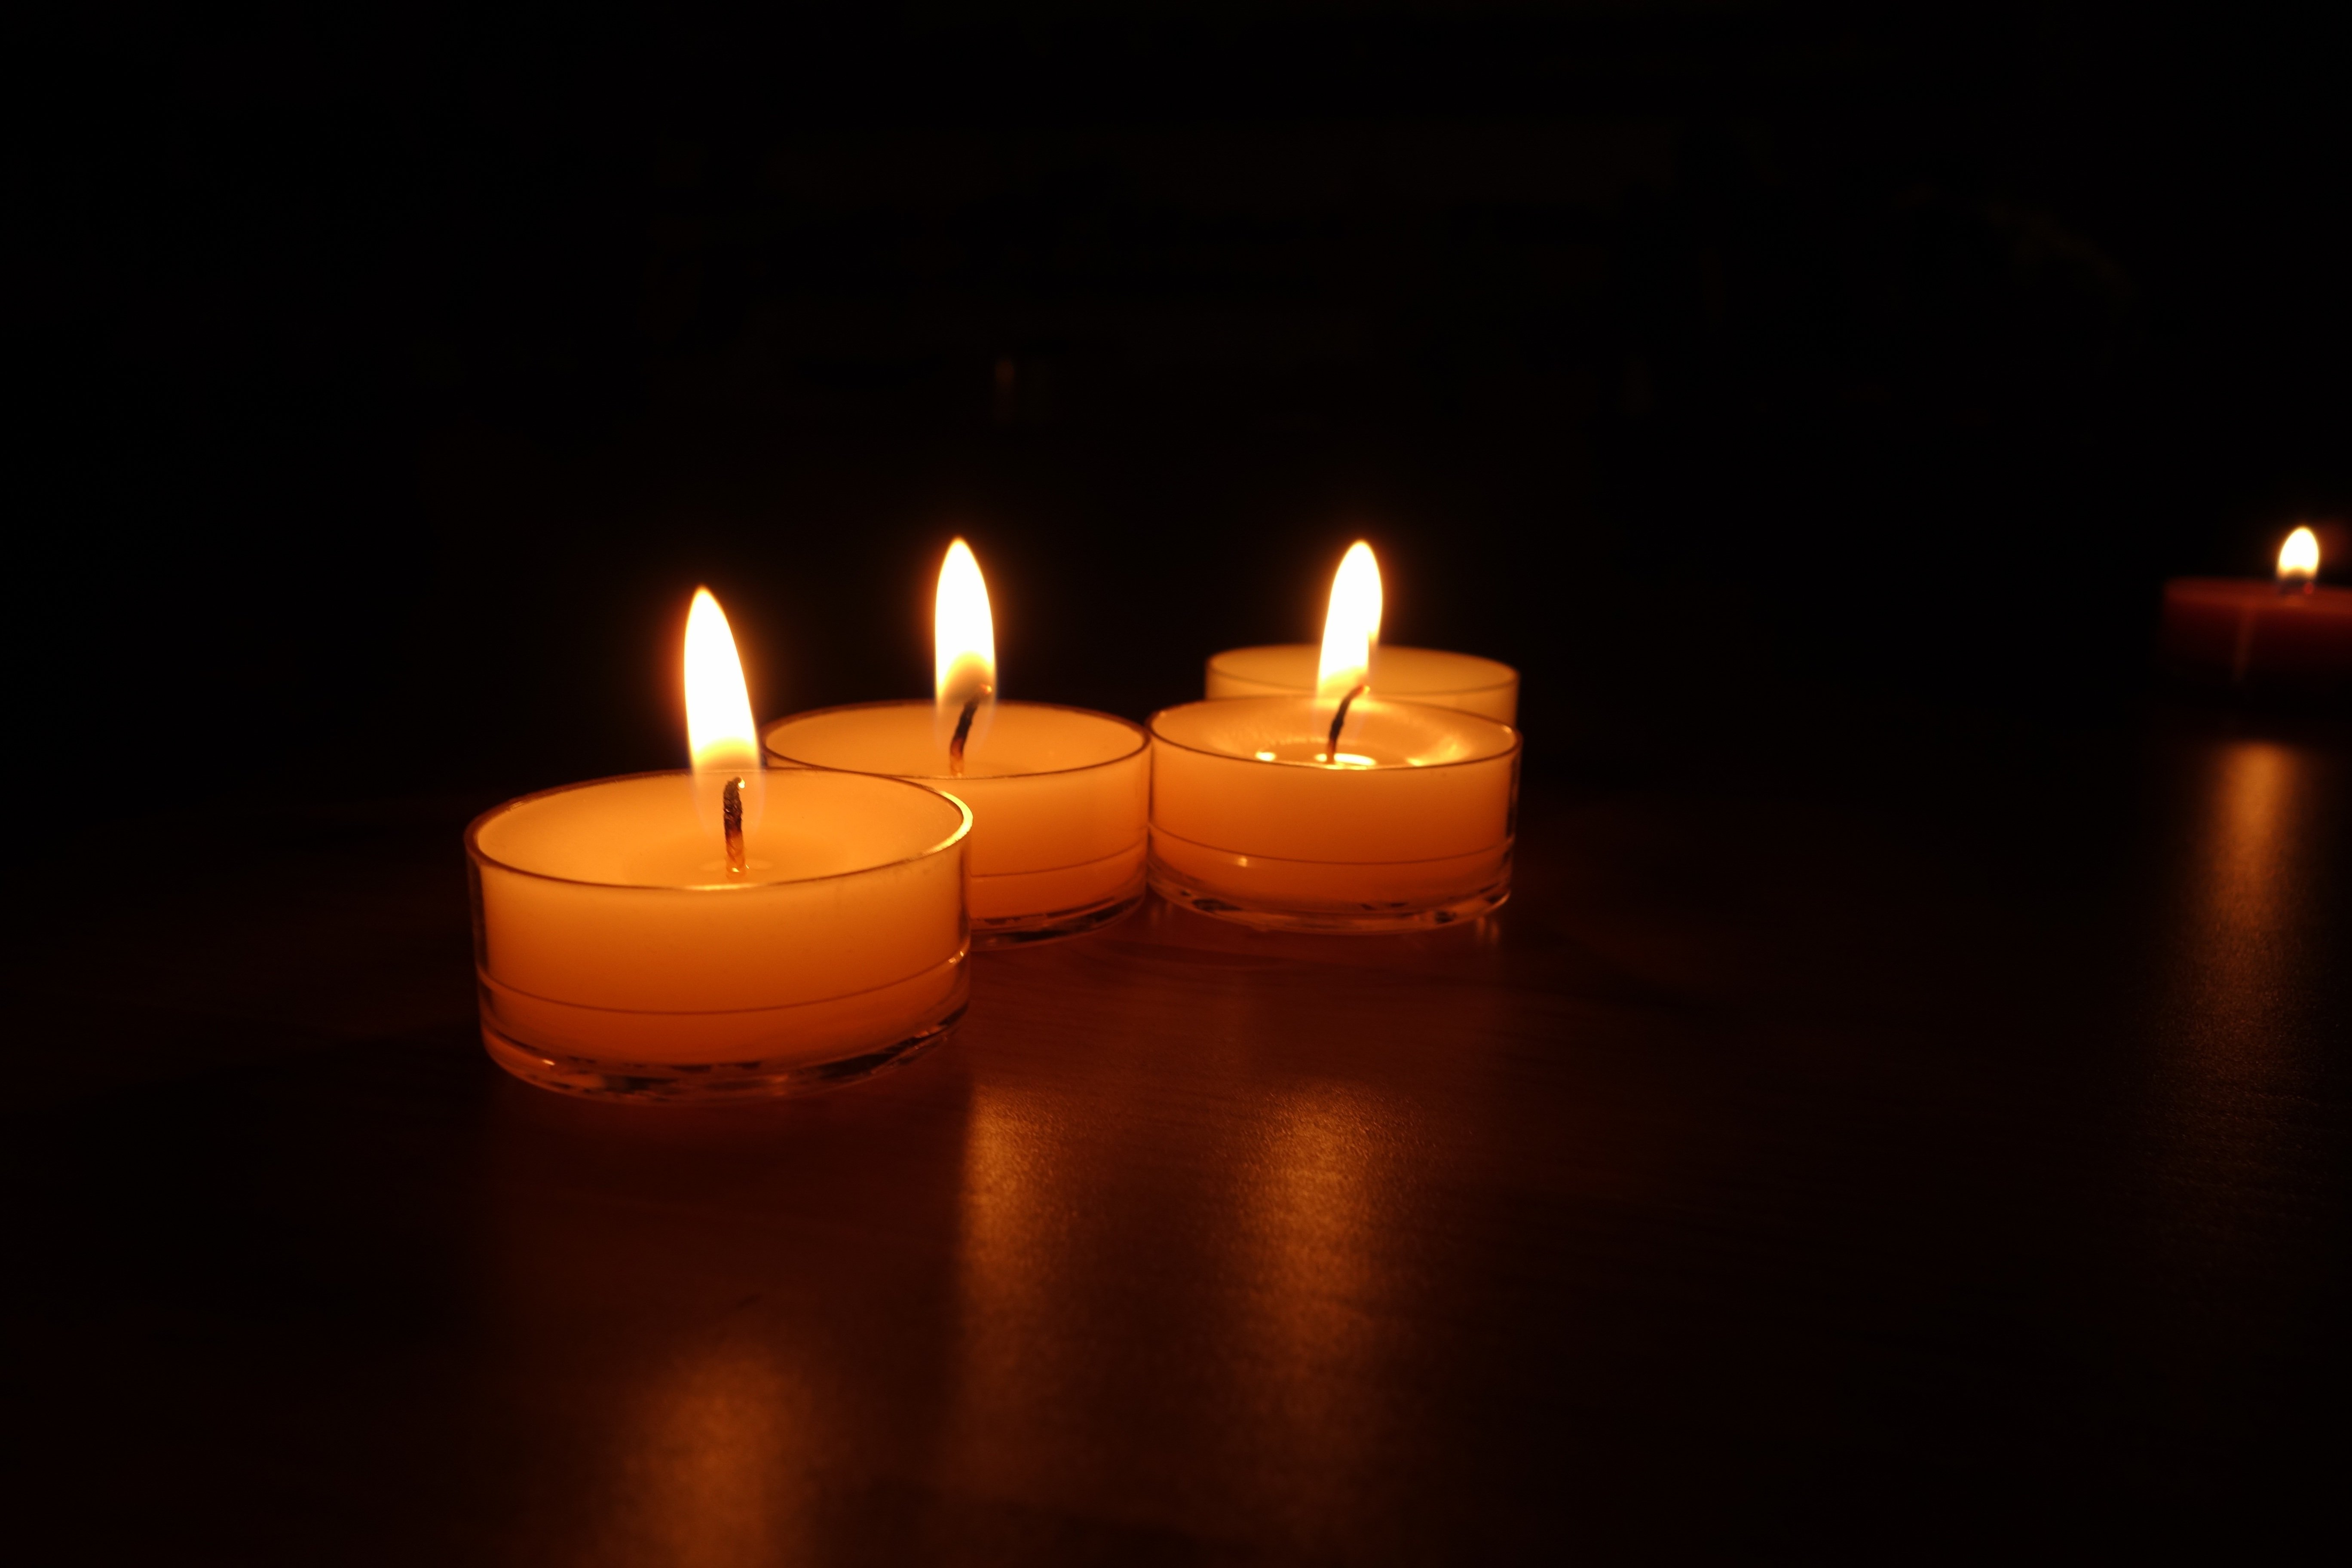 Фото свечи в темноте. Романтические свечи. Свечи романтика. Свеча в темноте. Романтические свечи в темноте.